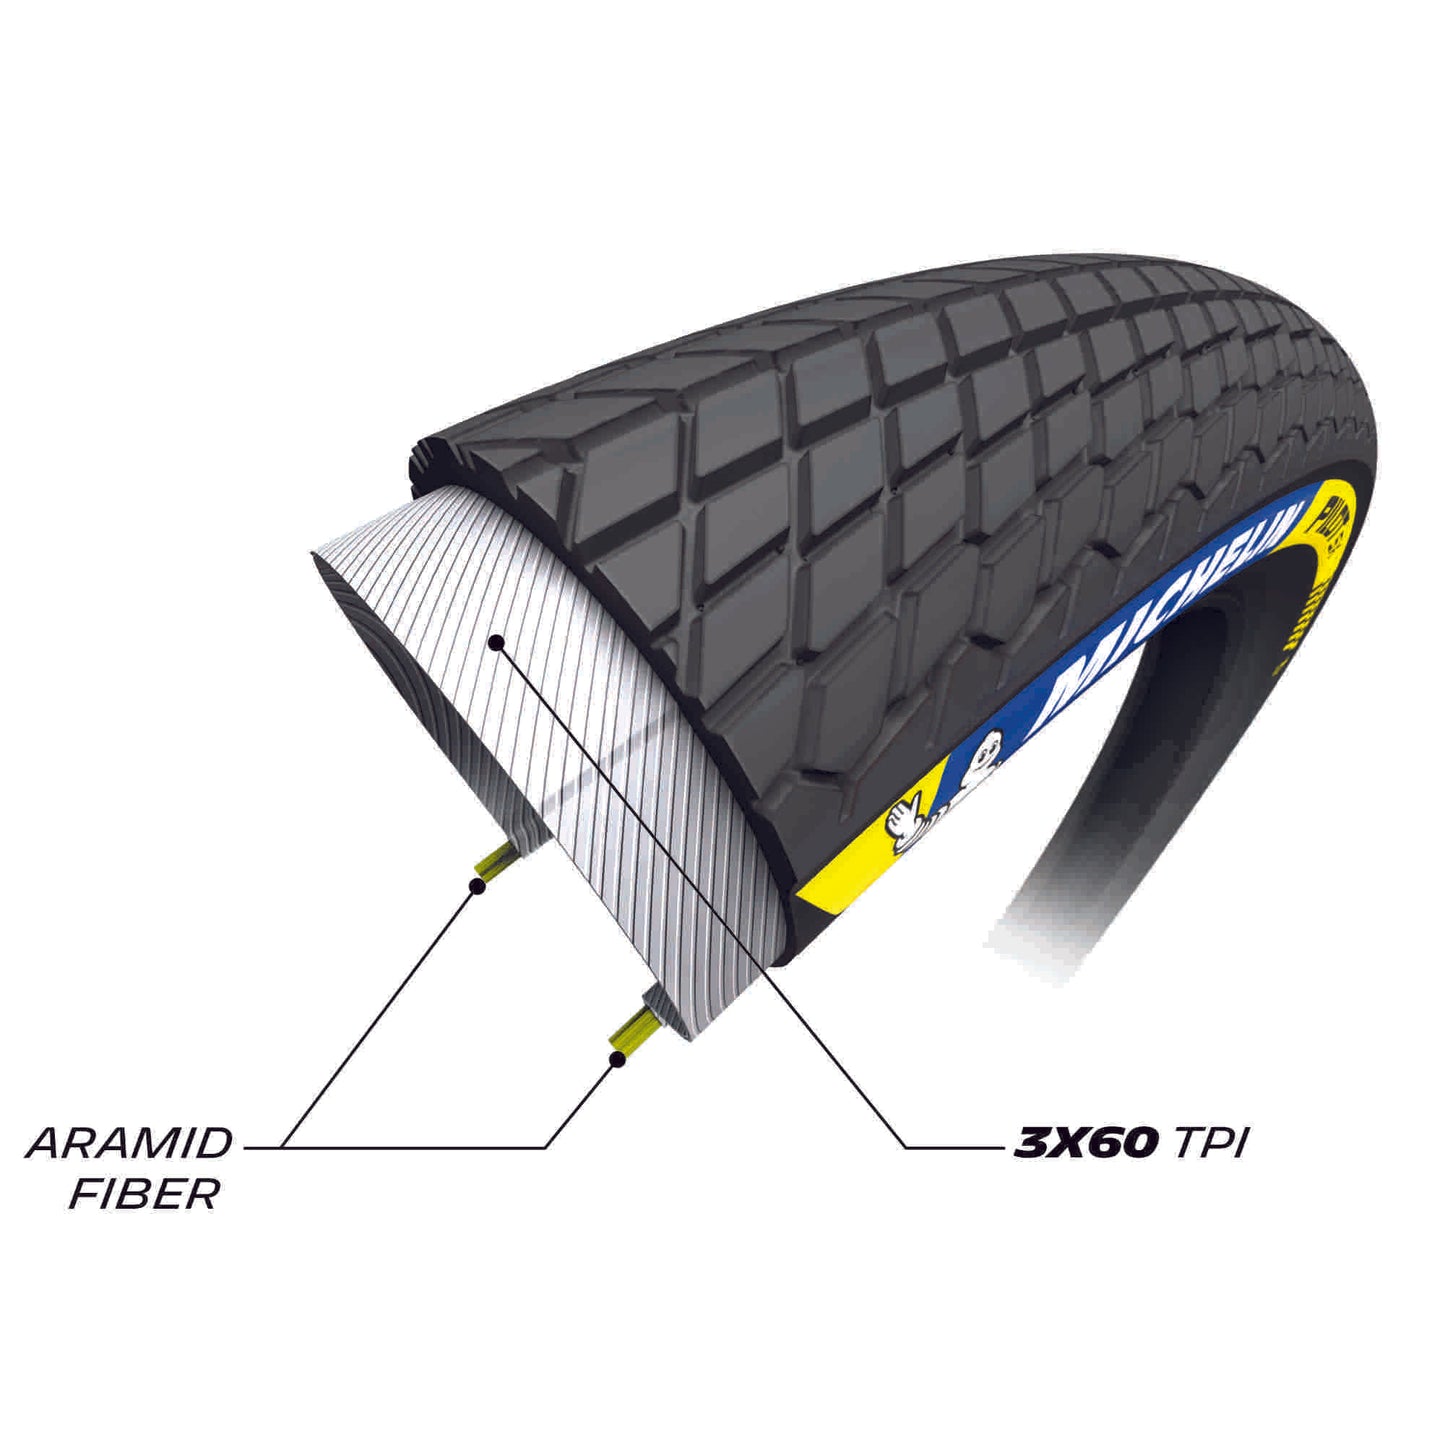 Michelin Pilot SX Tyre